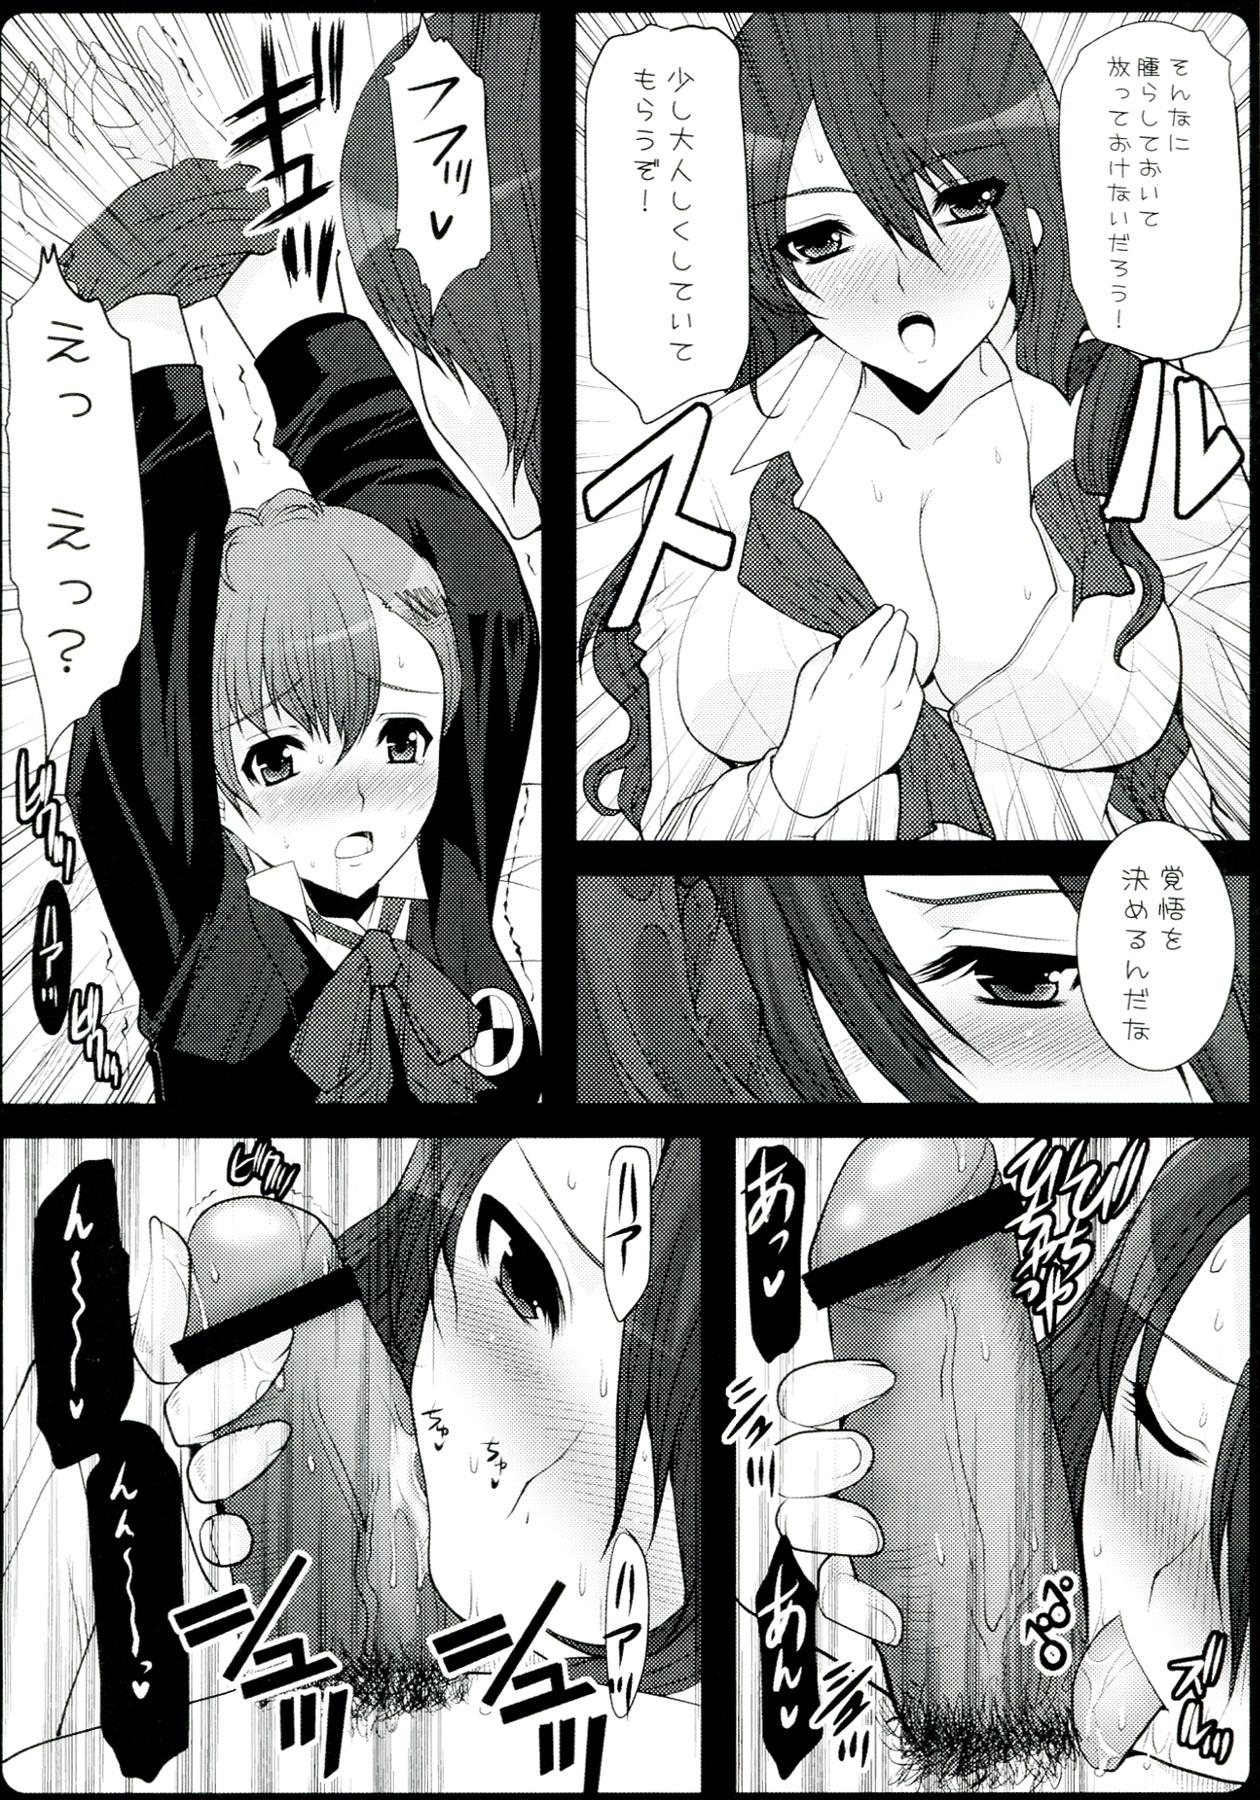 Women Sucking Dicks GAME GIRL GRAFFITI - Amagami Persona 3 Dream c club Ar tonelico Interracial Sex - Page 11